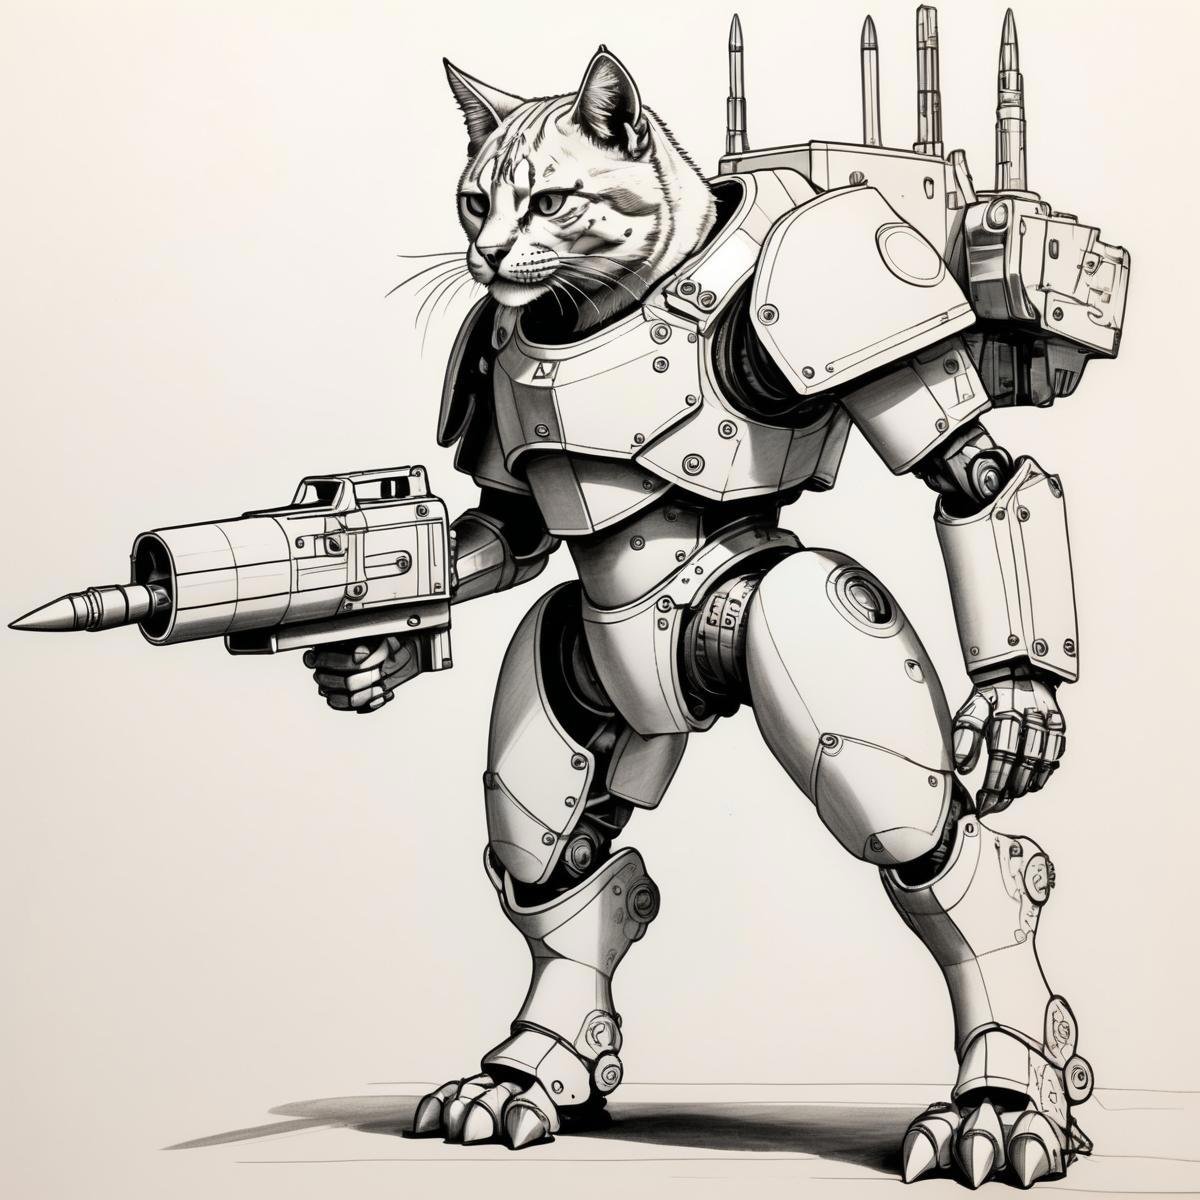 shemetric drawing of a ikea battle cat, sharp edges, mounted rocket launcher, armor